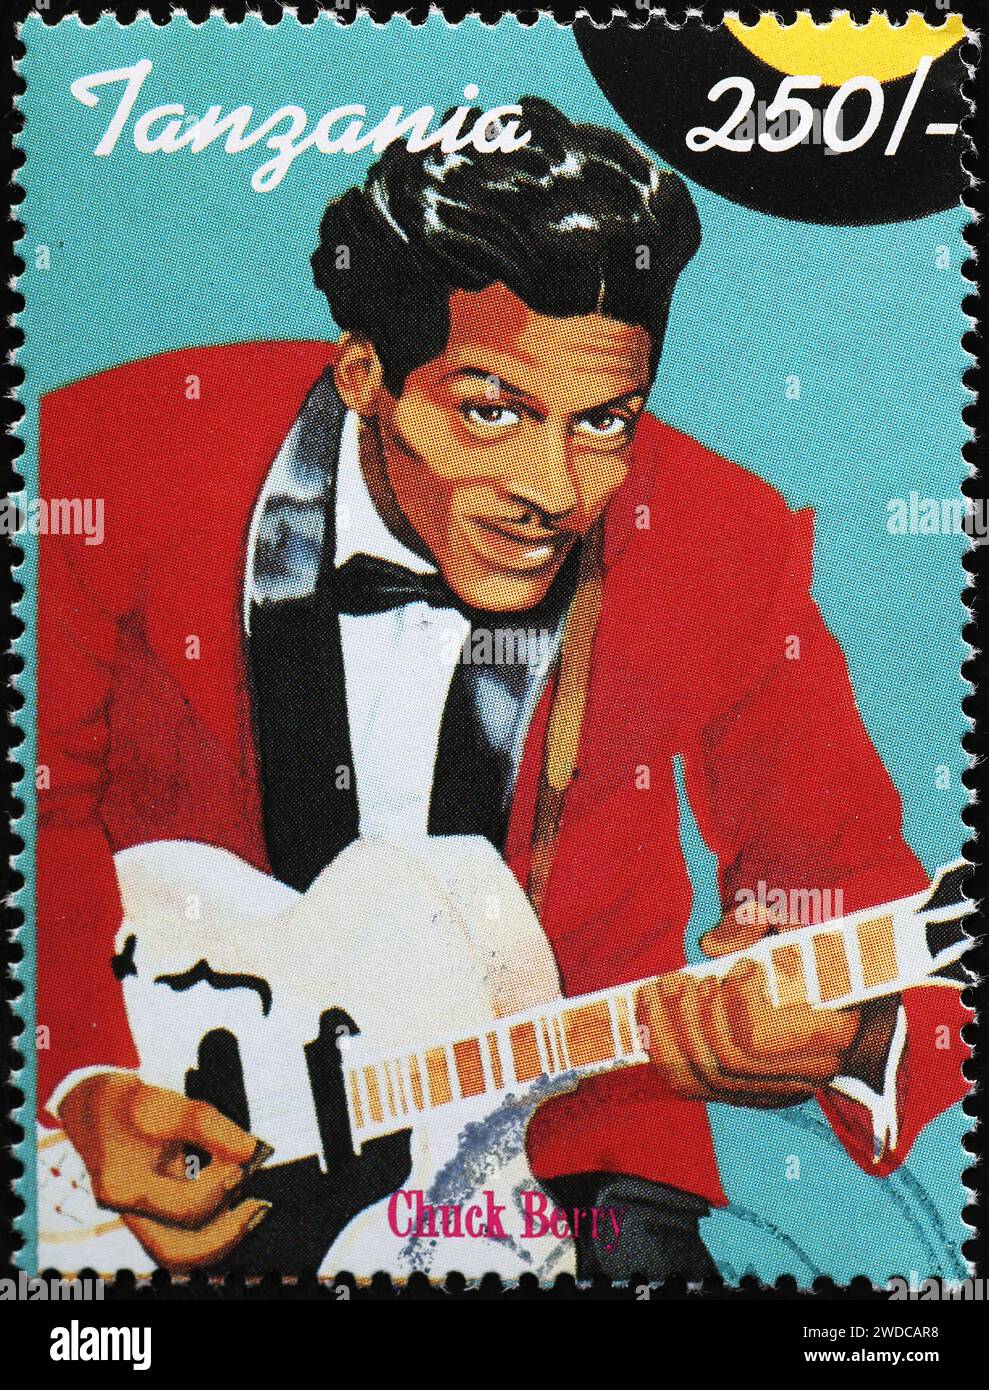 Chuck Berry on postage stamp of Tanzania Stock Photo